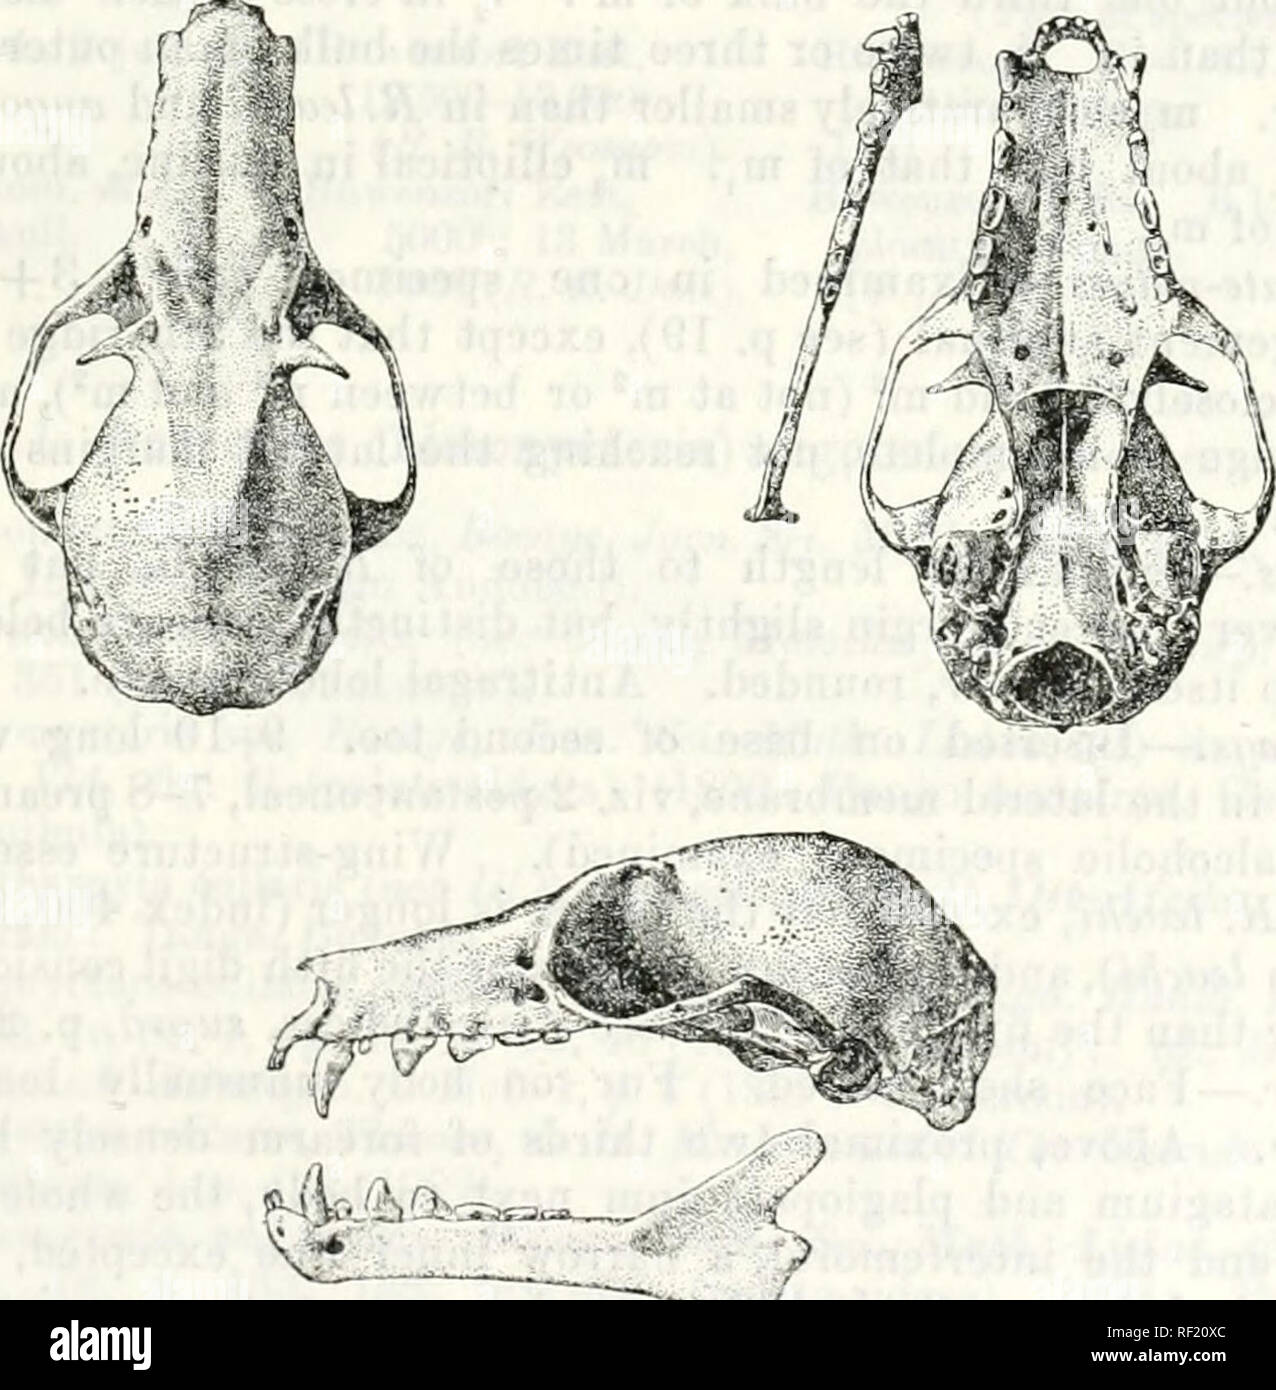 . Catalogue of the Chiroptera in the collection of the ... Museum. ROrSETTUS LANOSUS. 49 10. Ronsettiis (Stenonycteris) lanosus, Thos. Xantharpyia ffigyptiaca (wee Geof.), Horxfield, Cat. Mamm. Mus. E. hid. Co. p. 29 (iSol: Abyssinia). Eleutherura ae-ryptiuca (pt.), Gruy, Cat. Monk. Sfc. p. 117 (1870: Abyssinia). Cynonvcteris a?gvptiaca, Dohsim, Cat. Chir. B. M. p. 7o, specimen e ^ (1878: Abyssinia). Cynopterus (Cynonyrteris) ajsryptiaca (pt.), TroufSiart, Rev. i)- May. Znol. (.3) vi. p. 206 (1878: Abyssinia). lioiisettus peo-yptiacus (pt.), Trouessart, Cat. Mainin., Sappl. p. GO (190i: Abyssi Stock Photo